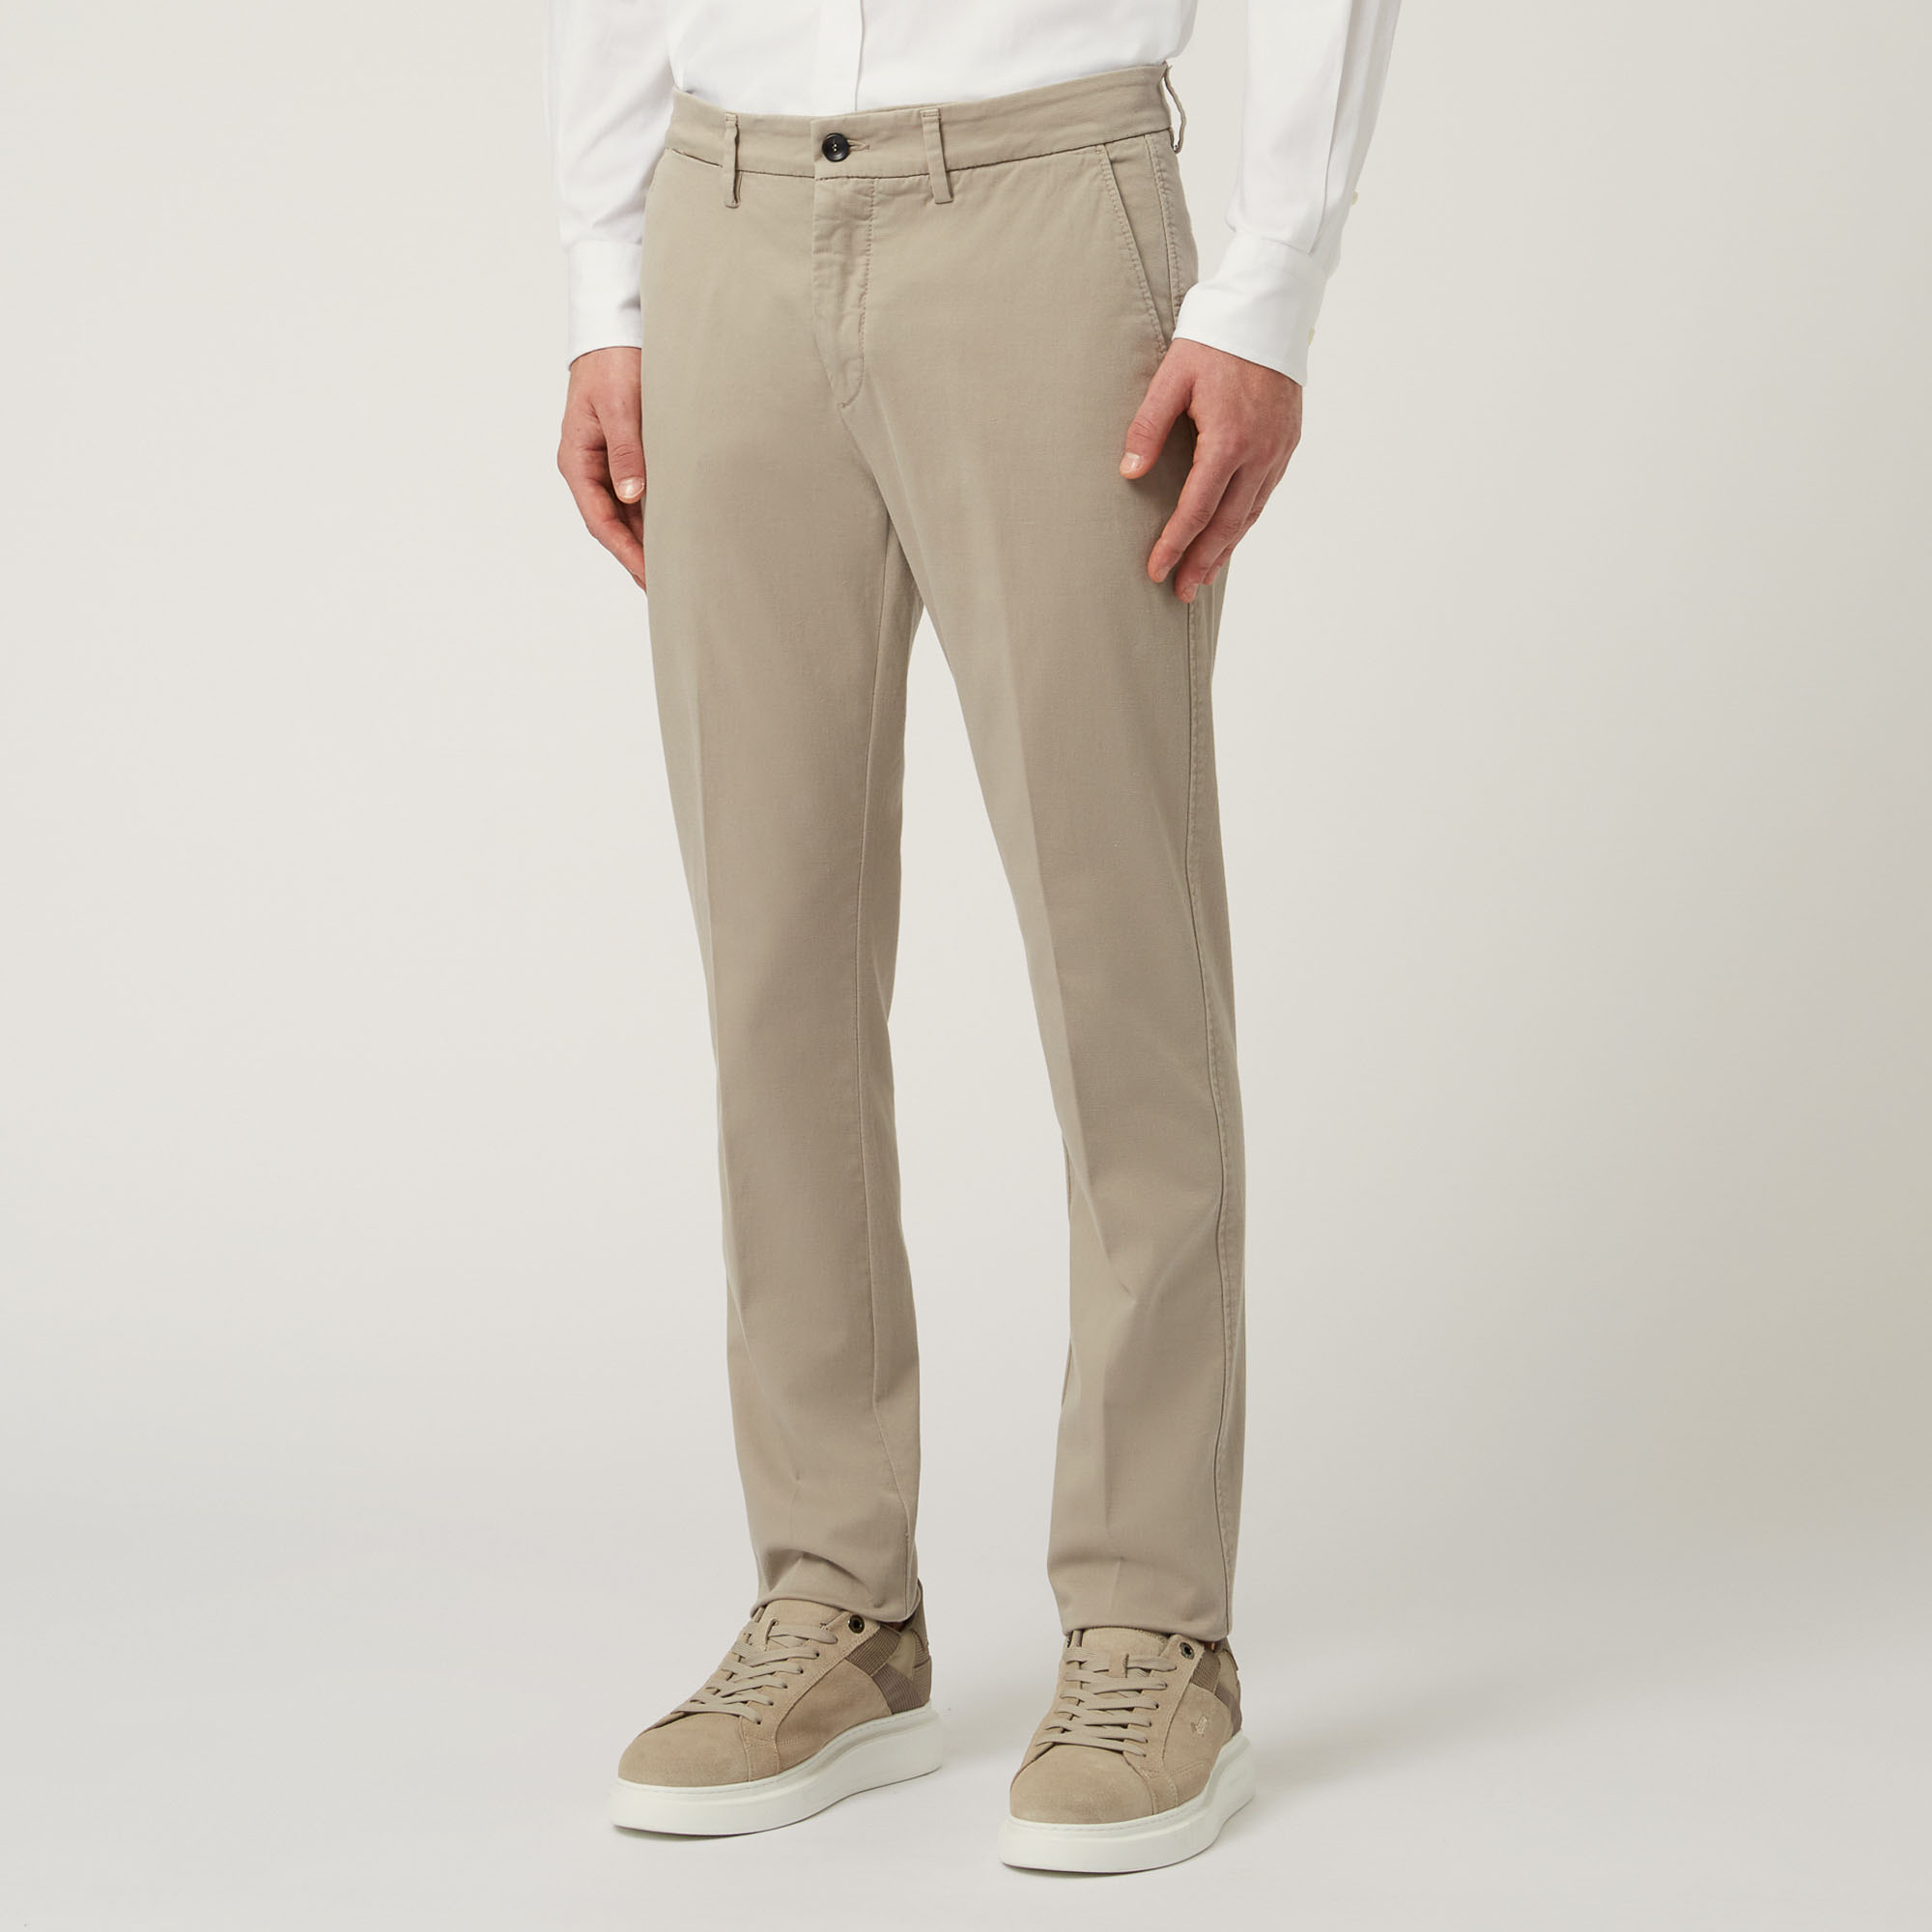 Pantalones Essentials de algodón elástico, Beige, large